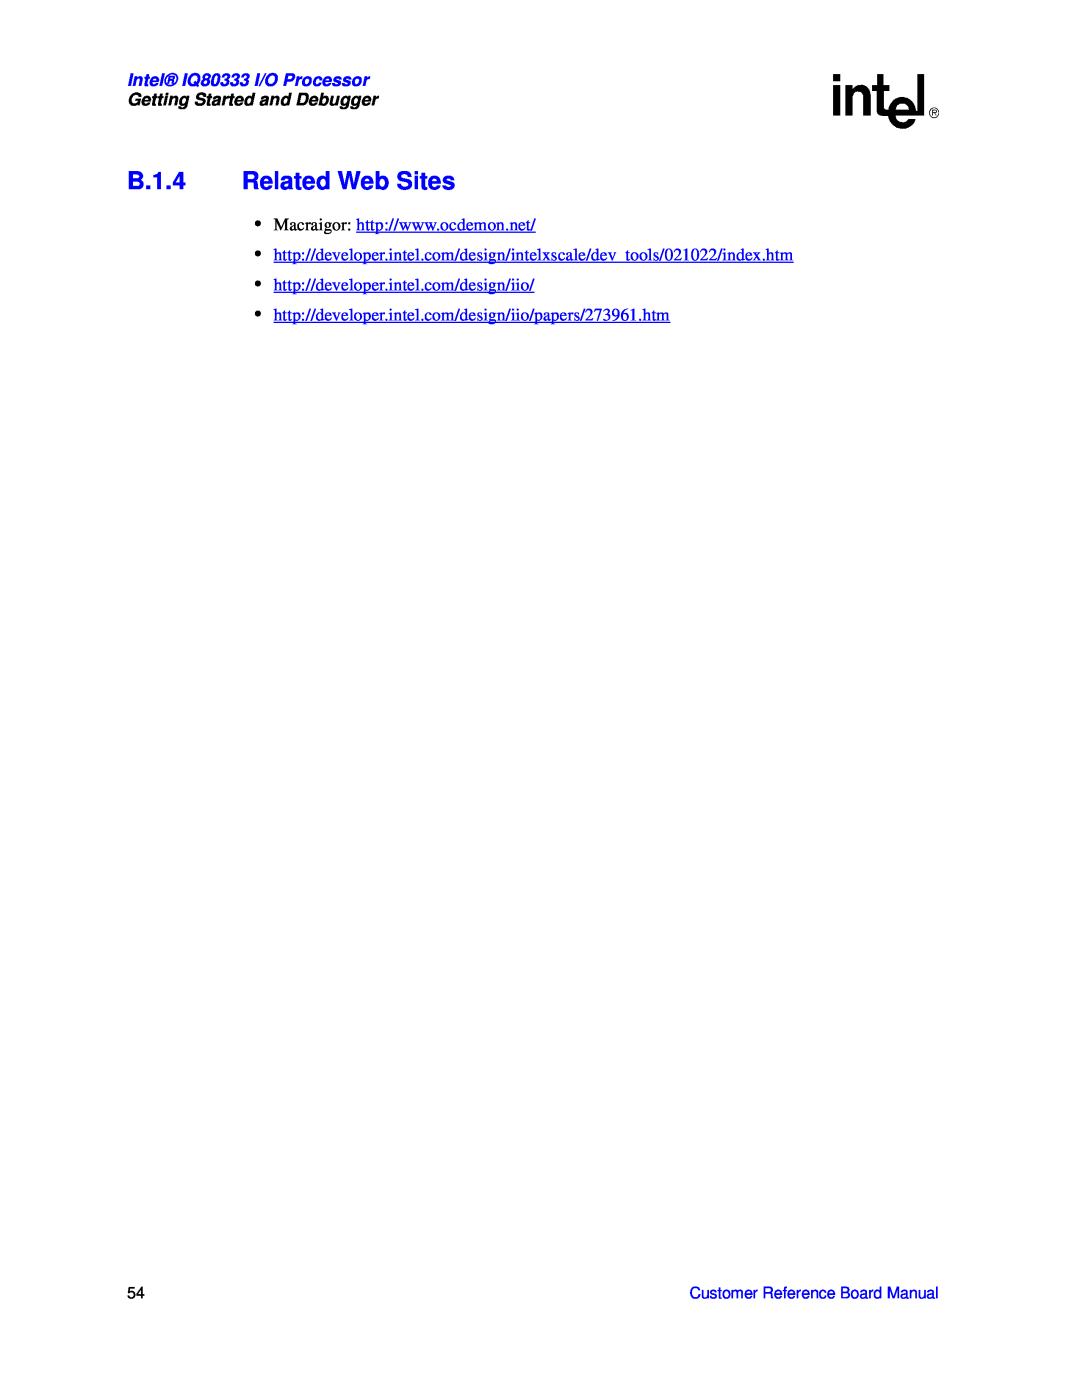 Intel manual B.1.4 Related Web Sites, Intel IQ80333 I/O Processor, Getting Started and Debugger 